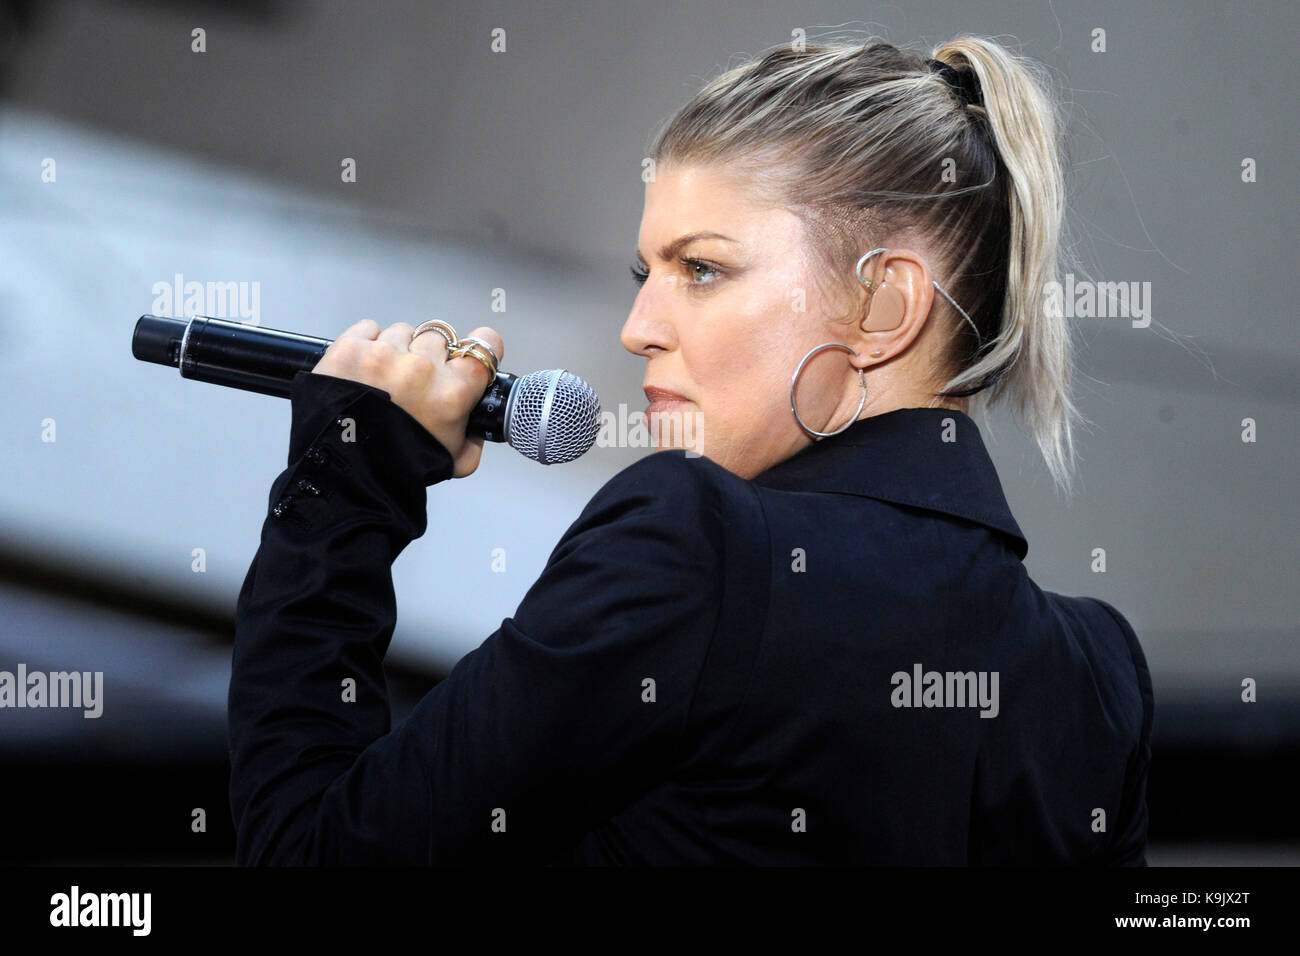 New York, New York, USA. September 2017. Fergie live auf der Bühne während der "NBC Today Show Citi Concert Series" am Rockefeller Plaza am 22. September 2017 in New York City. Quelle: Geisler-Fotopress/Alamy Live News Stockfoto